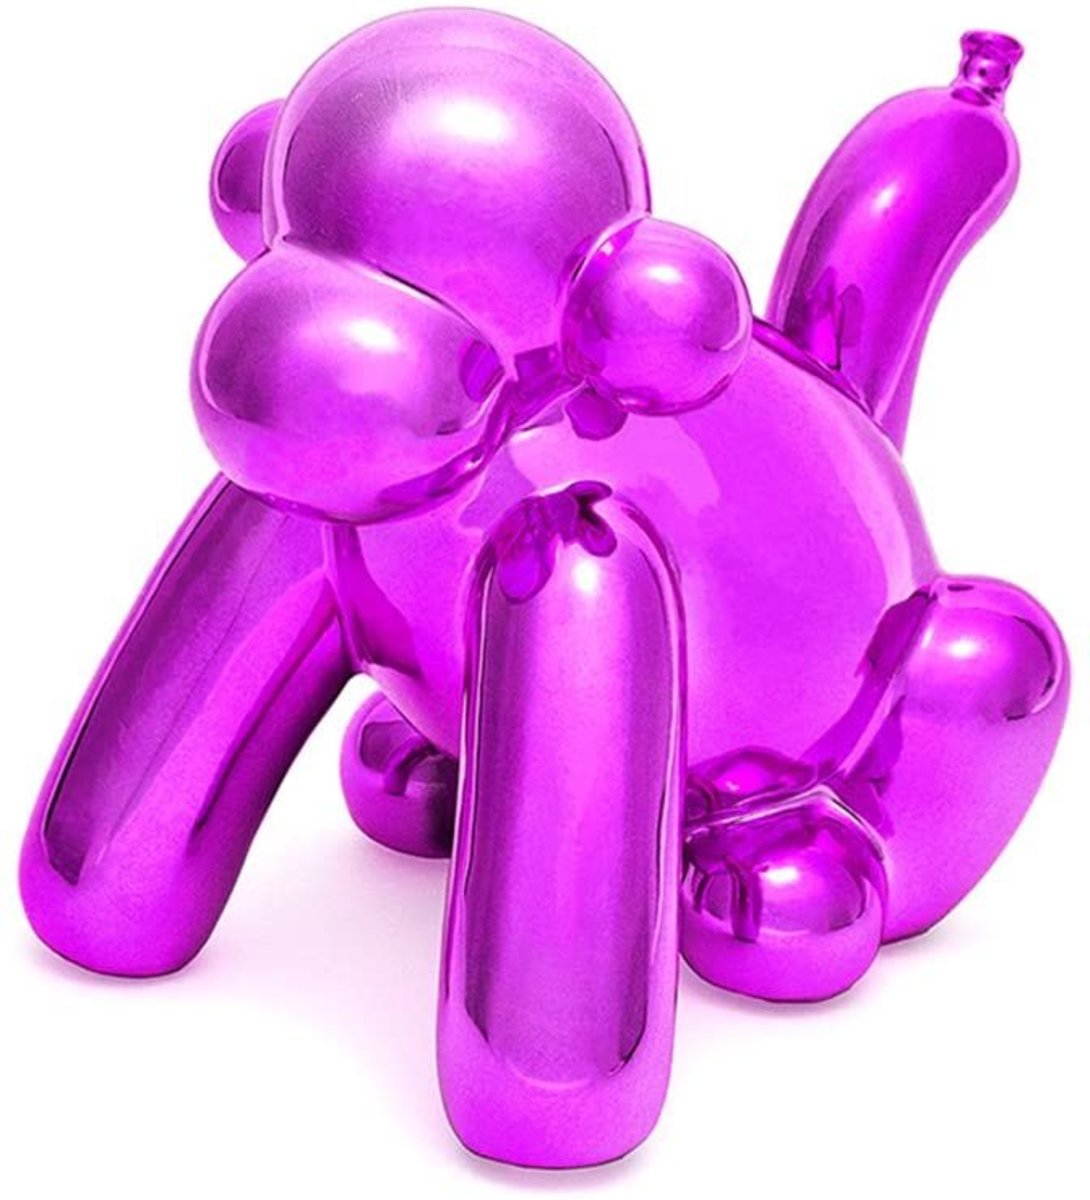 Balloon Money Bank Home Deco - BIG Monkey - Pink